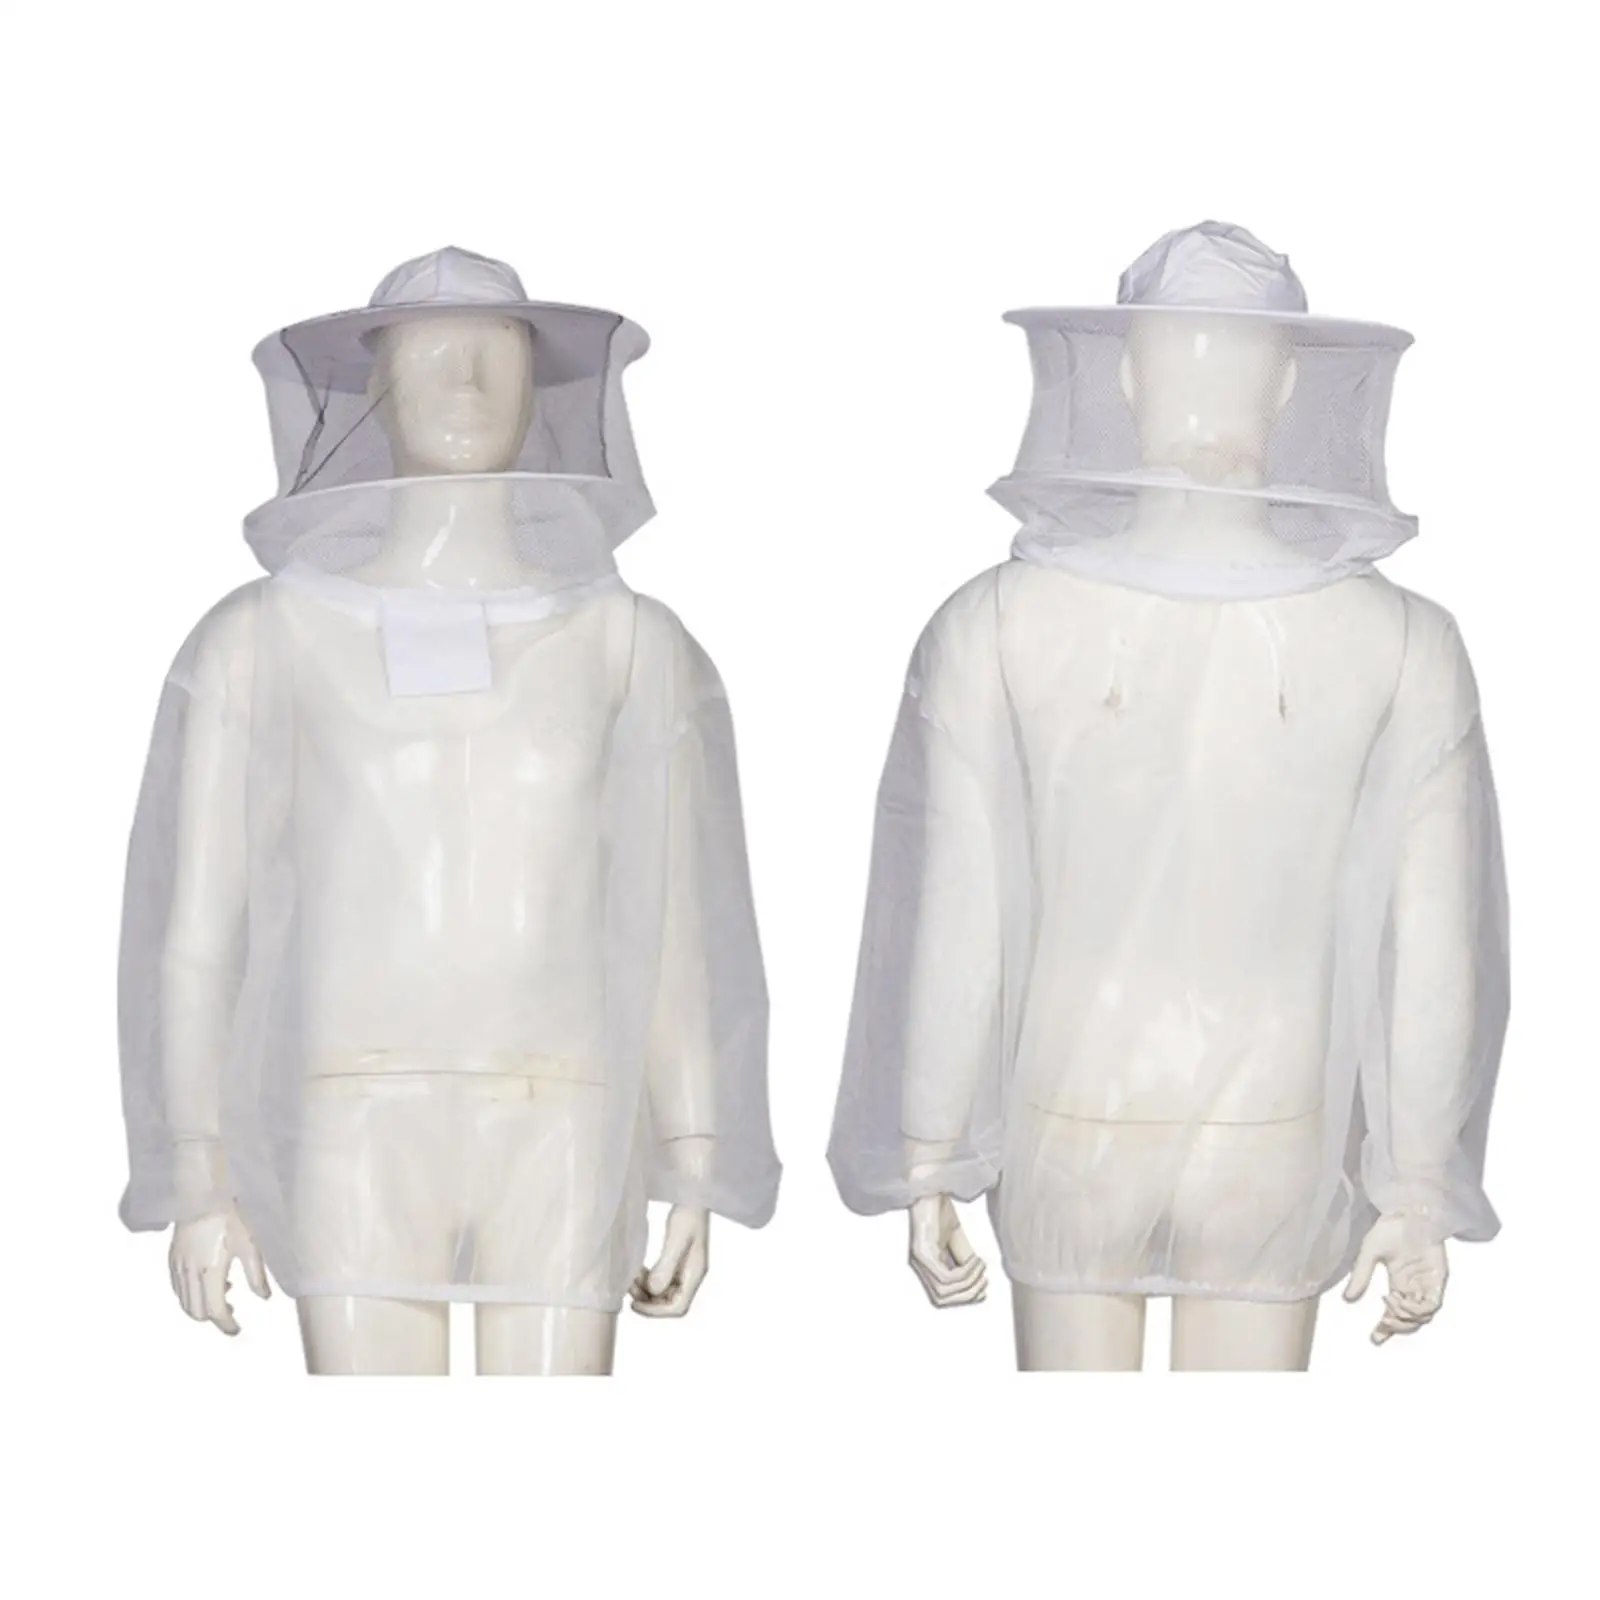 Bee Suit with Veil Hood Cotton Protective Equipment for Men Women Beekeeping Protective Suit for Commercial Beekeepers Beginner